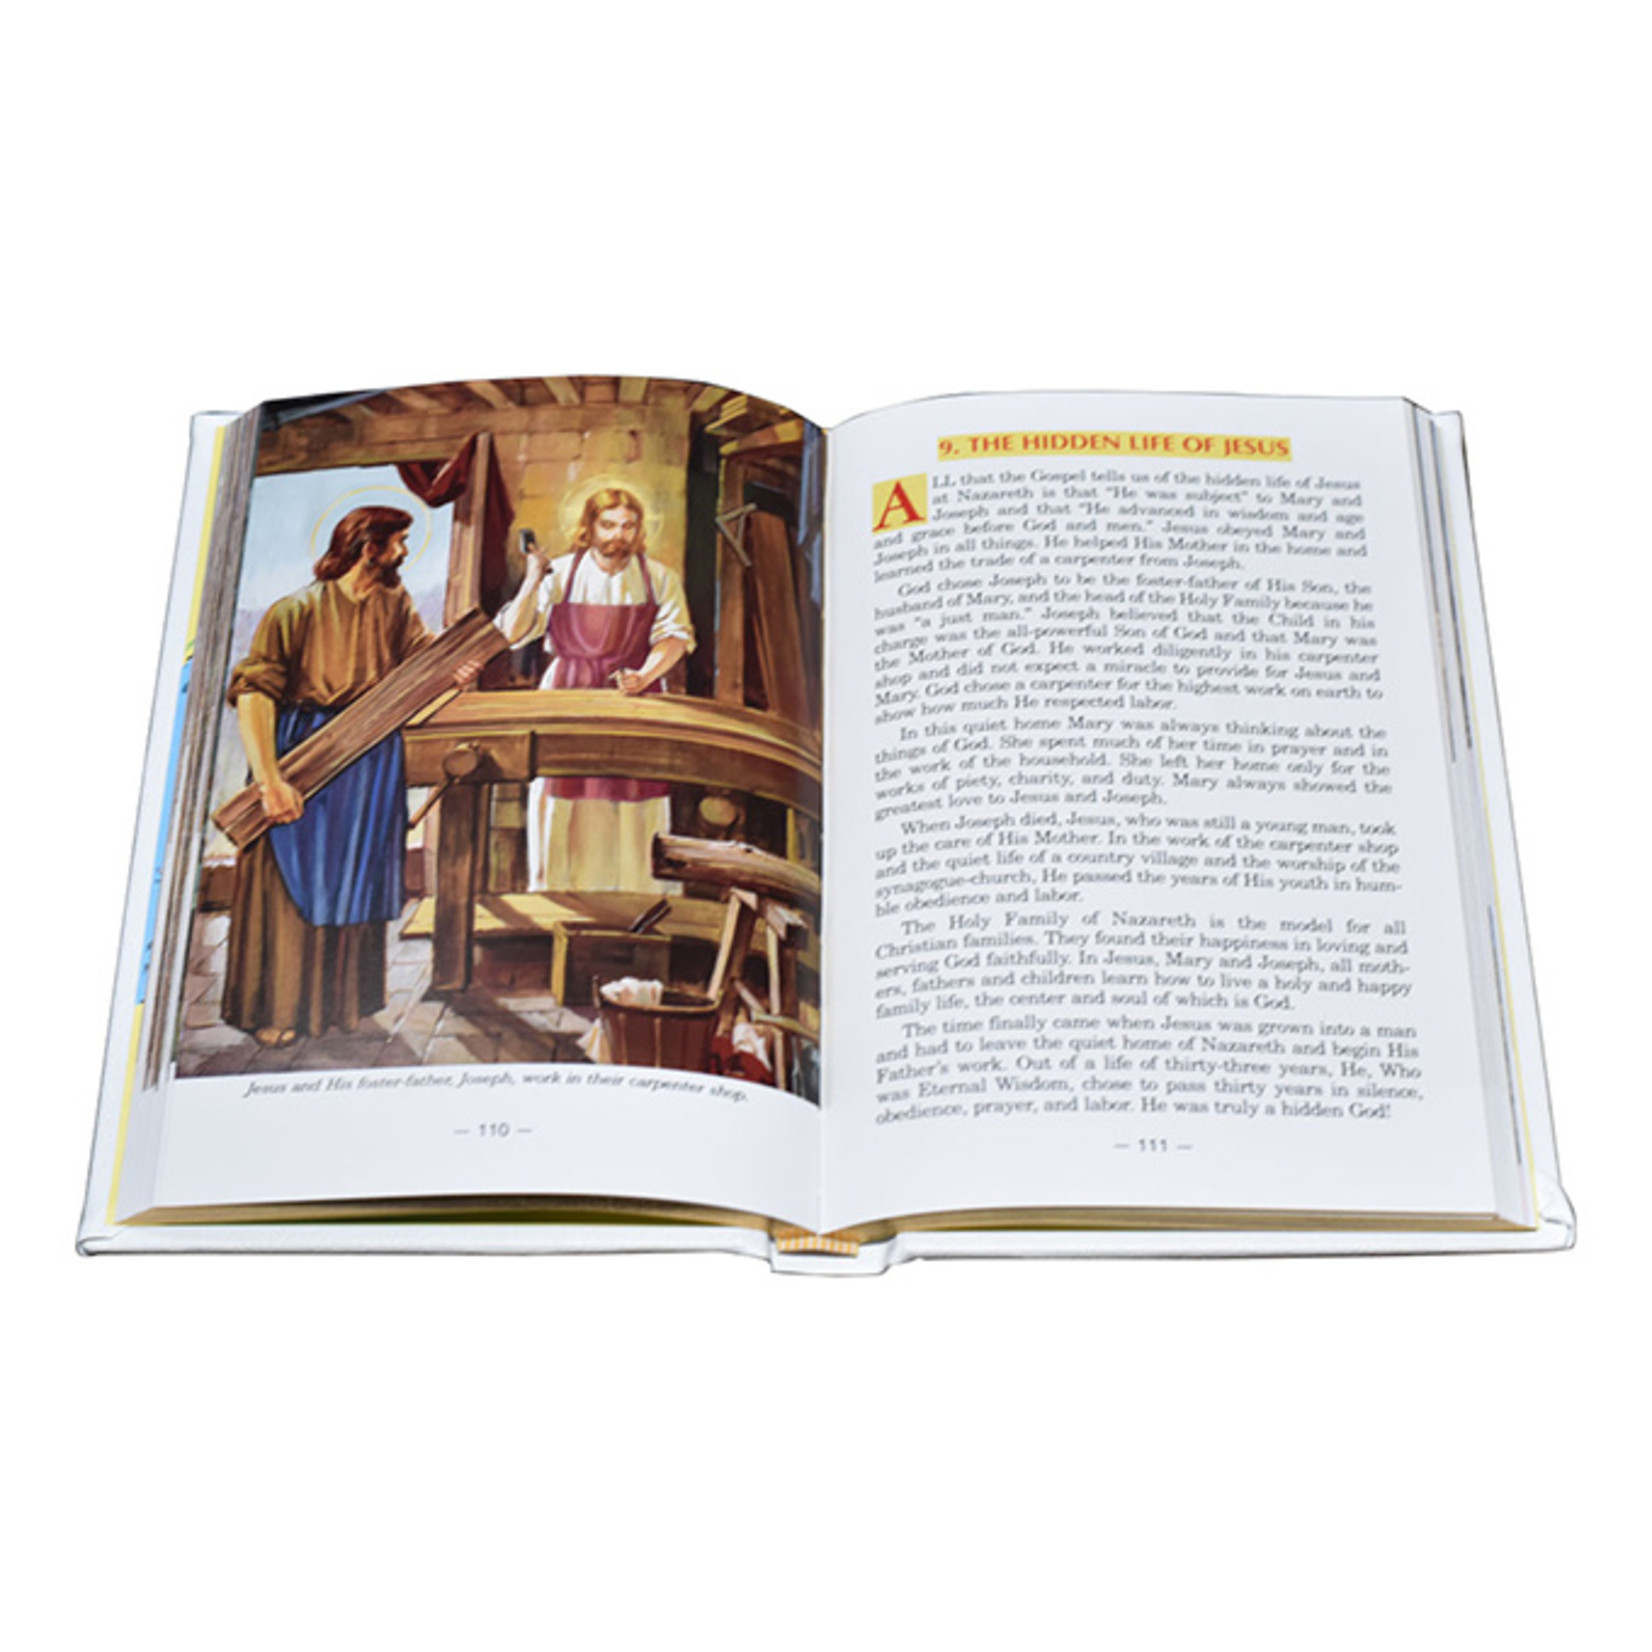 Catholic Picture White Bible